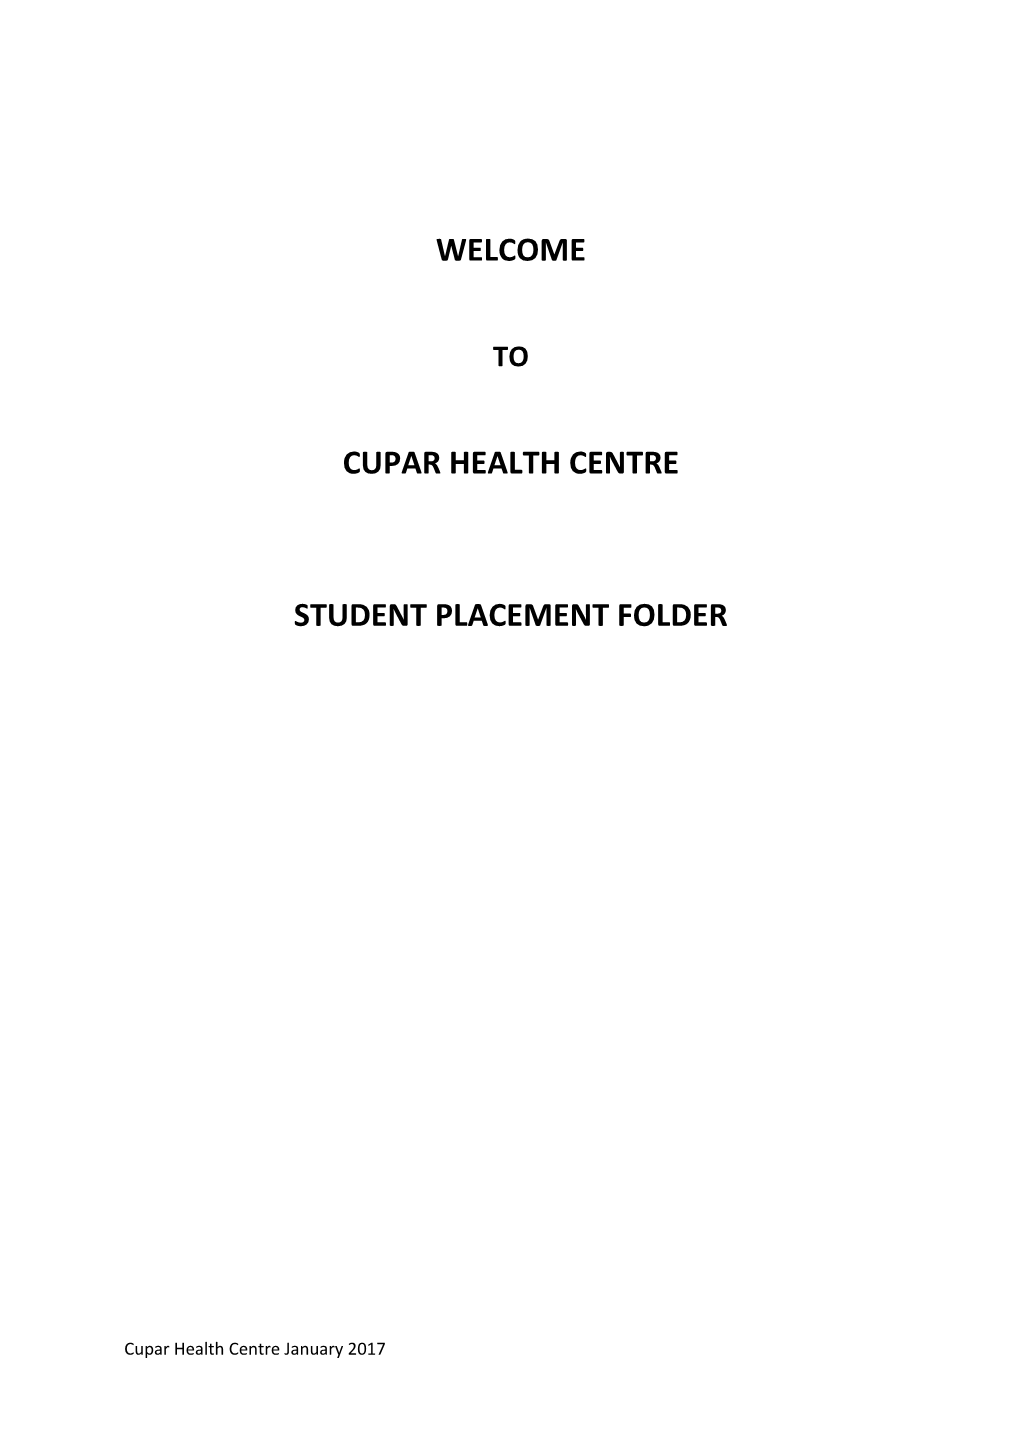 Cupar Health Centre